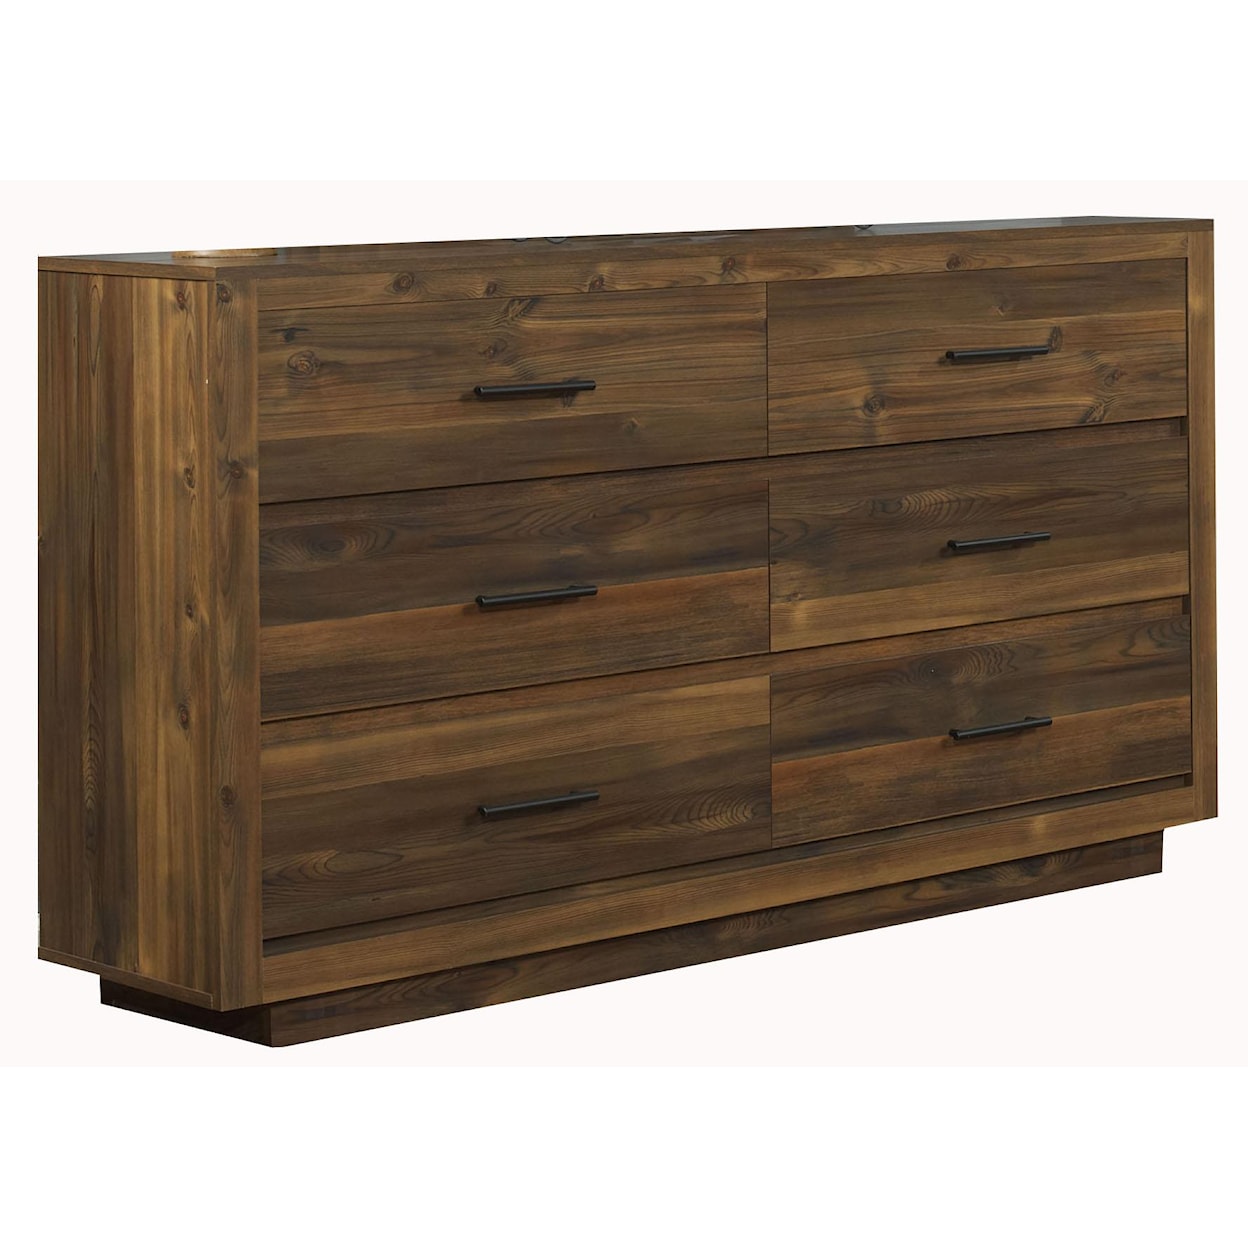 Perdue Cypress Grove Dresser